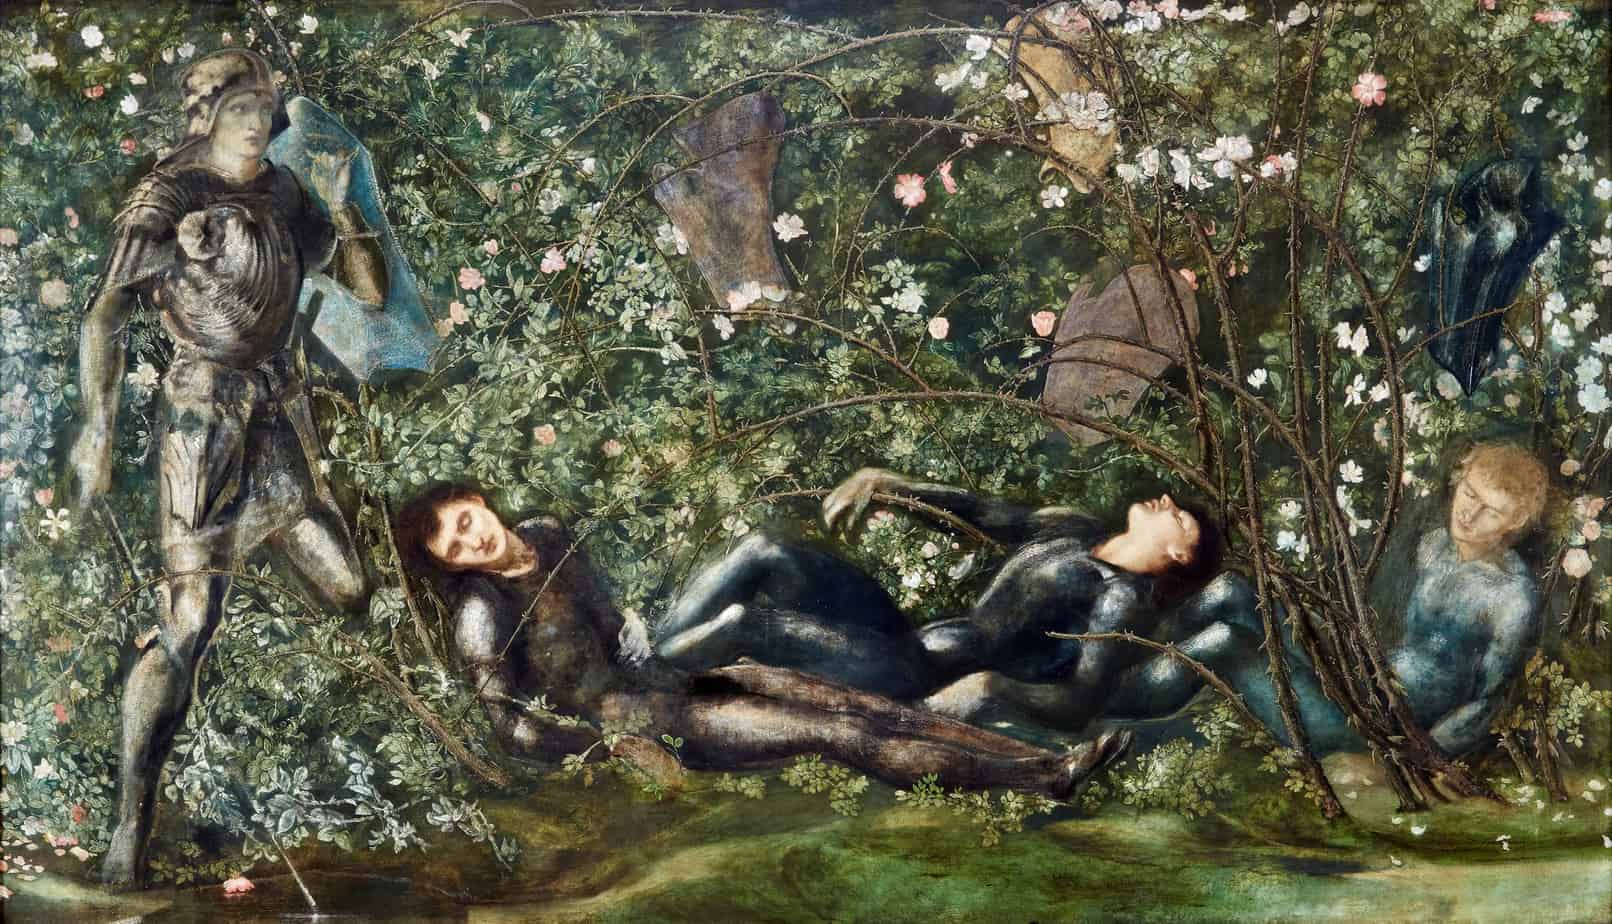 Edward Burne-Jones 1833-1898, The Prince Entering the Briar Wood, 1869, Sleeping Beauty